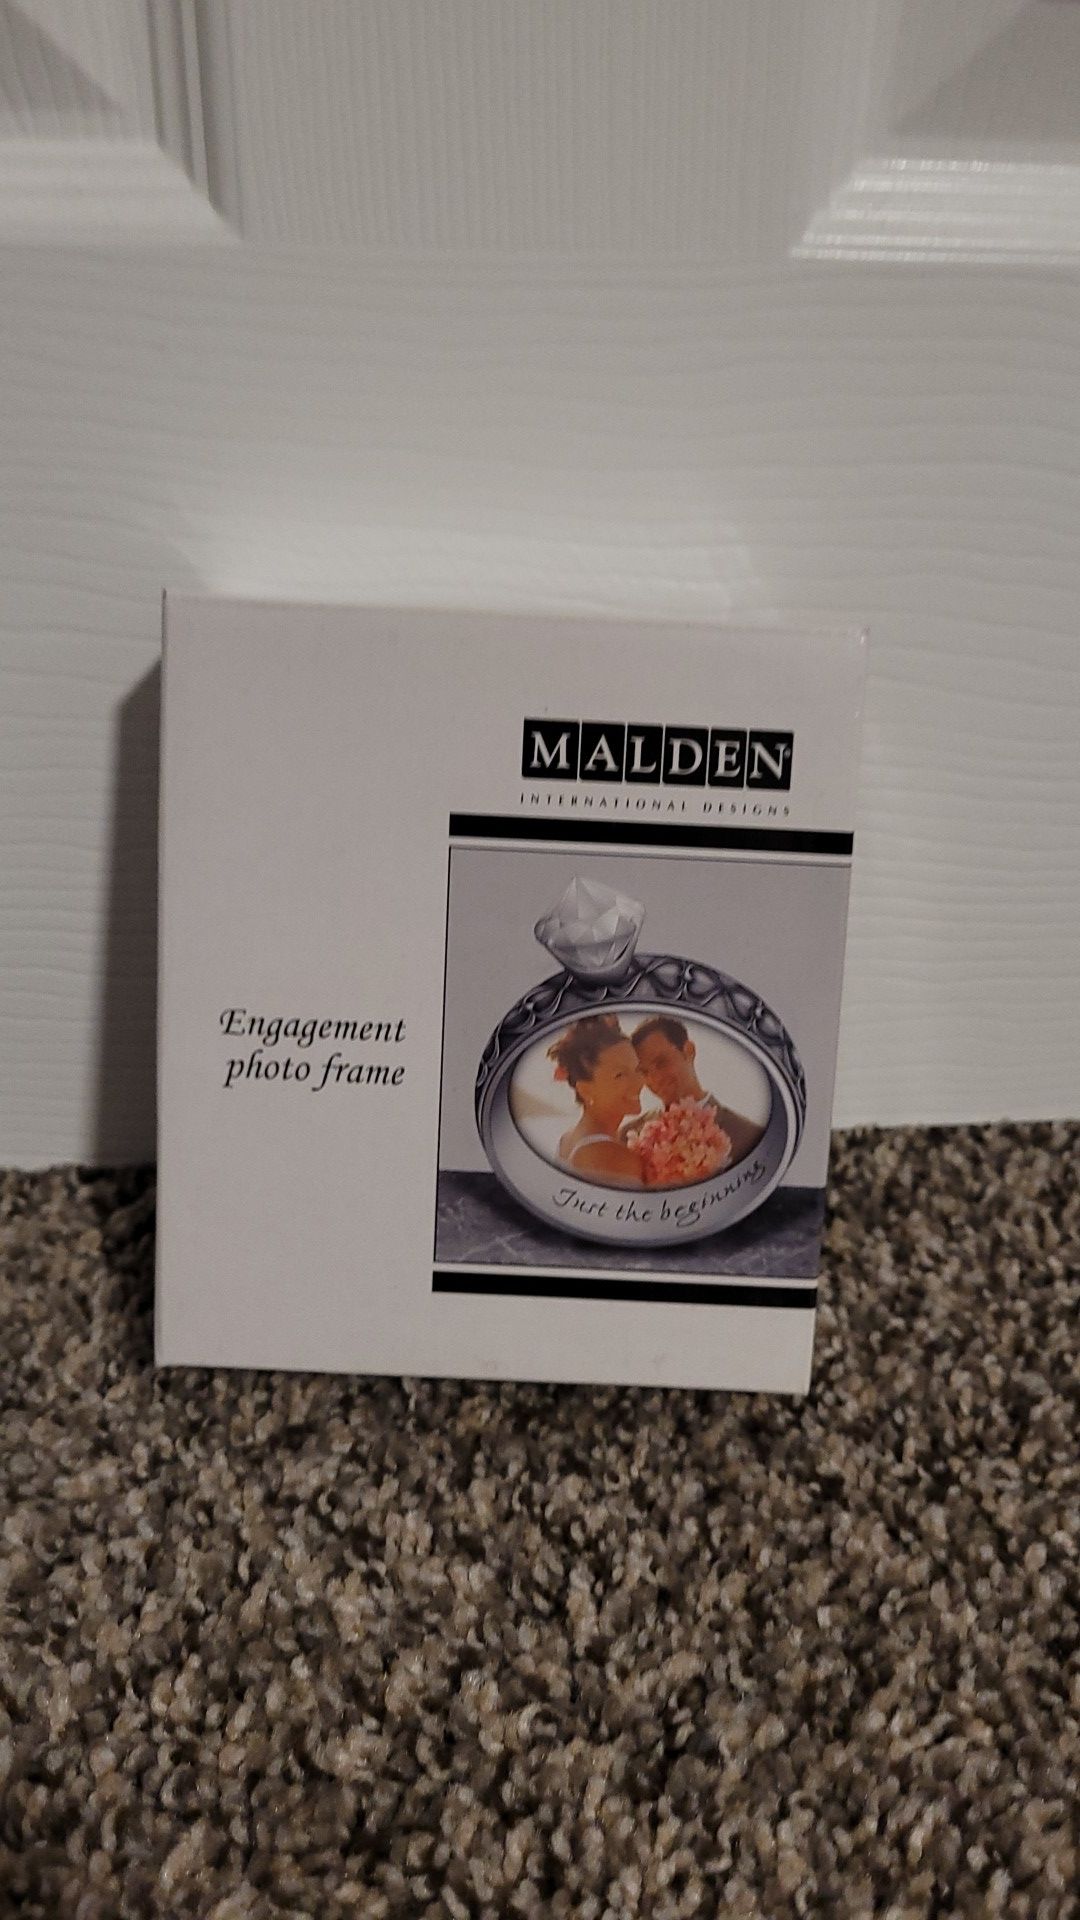 MALDEN Engagement photo frame